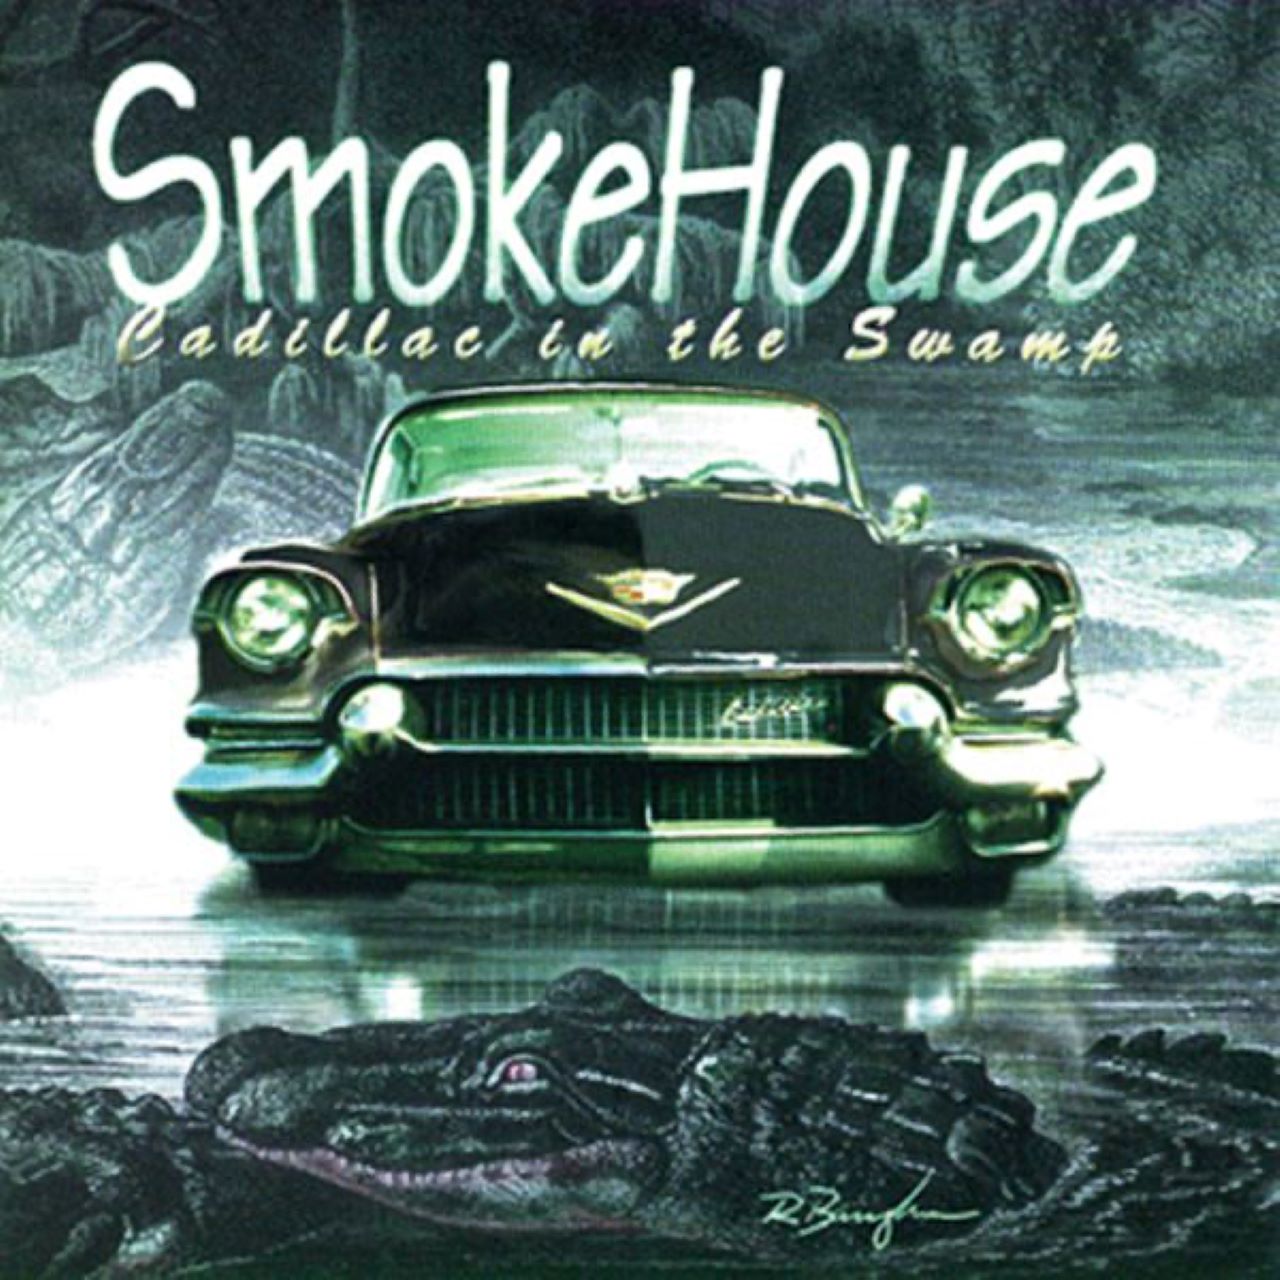 SmokeHouse – Cadillac ln The Swamp cover album